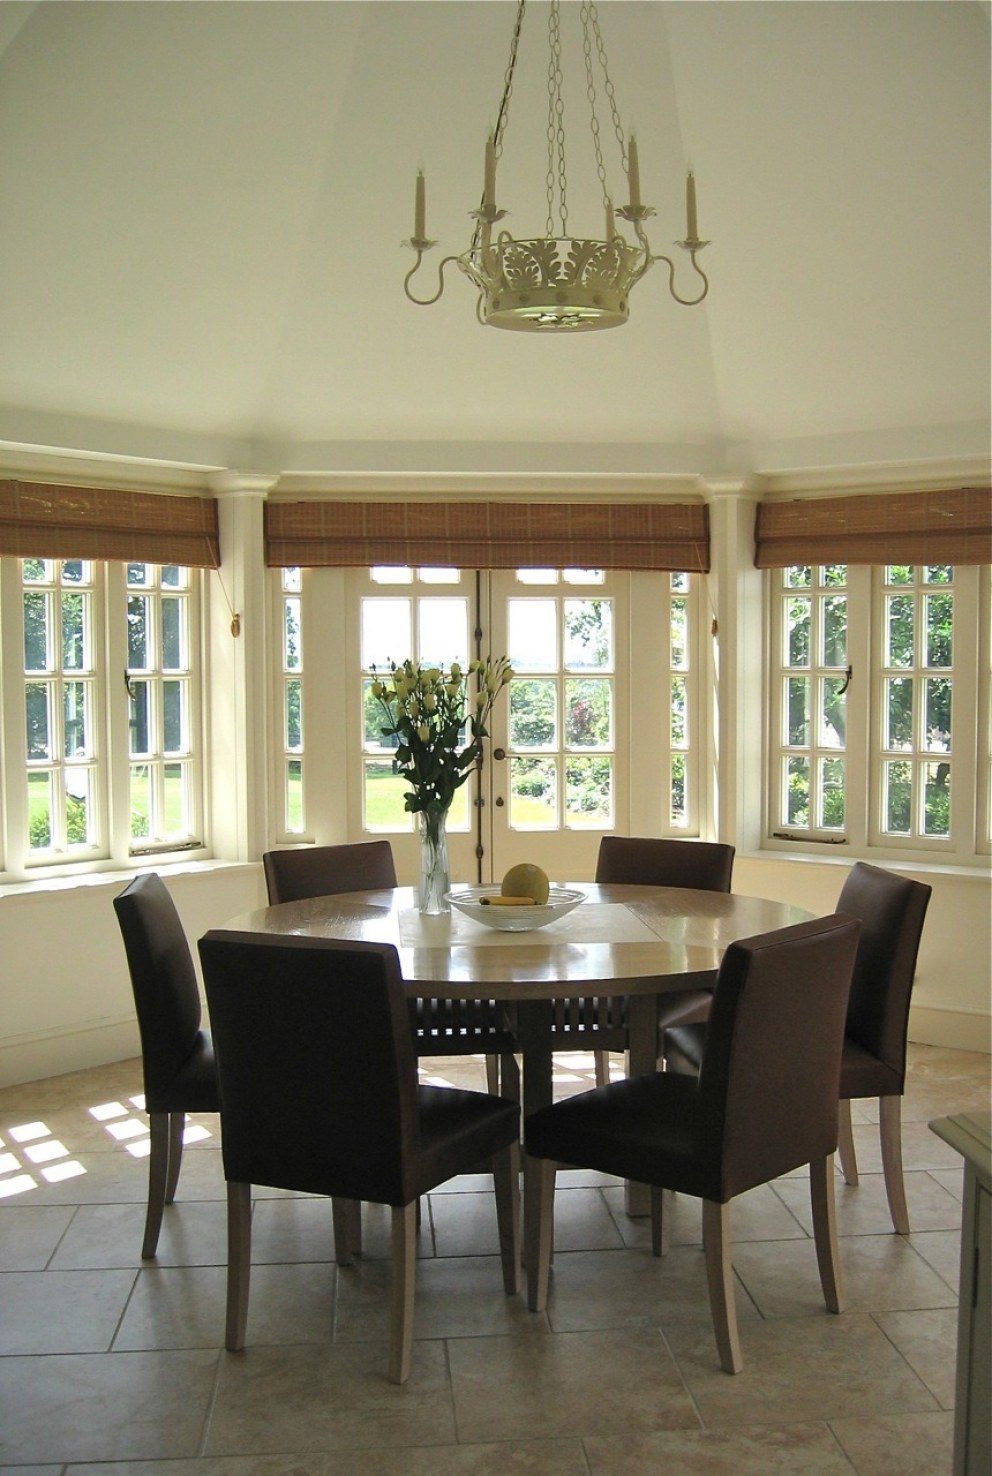 Totteridge | Kitchen dining area | Interior Designers